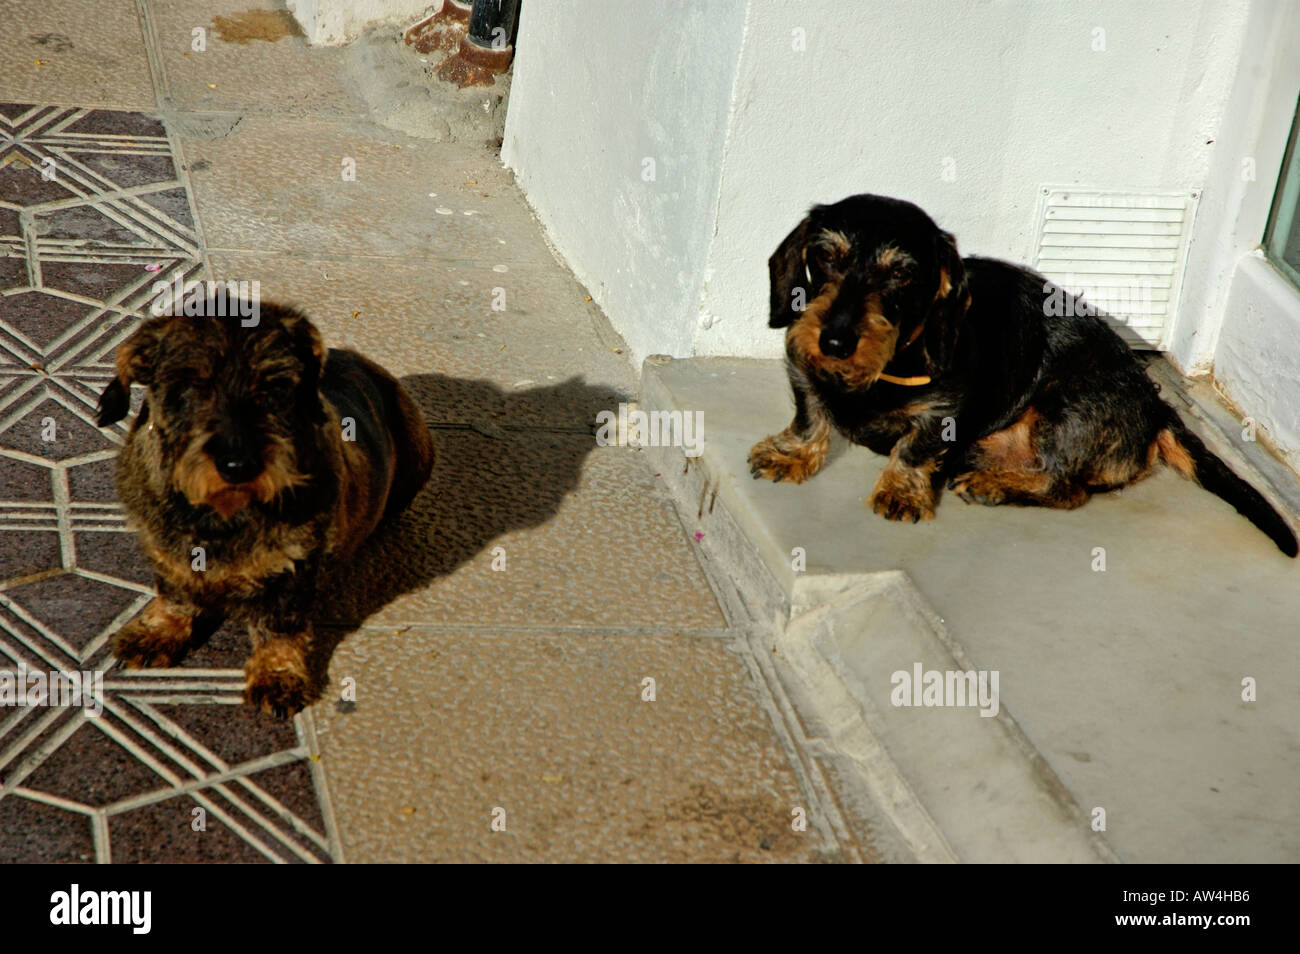 Two similar dogs on a doorstep taking a sunbath Stock Photo